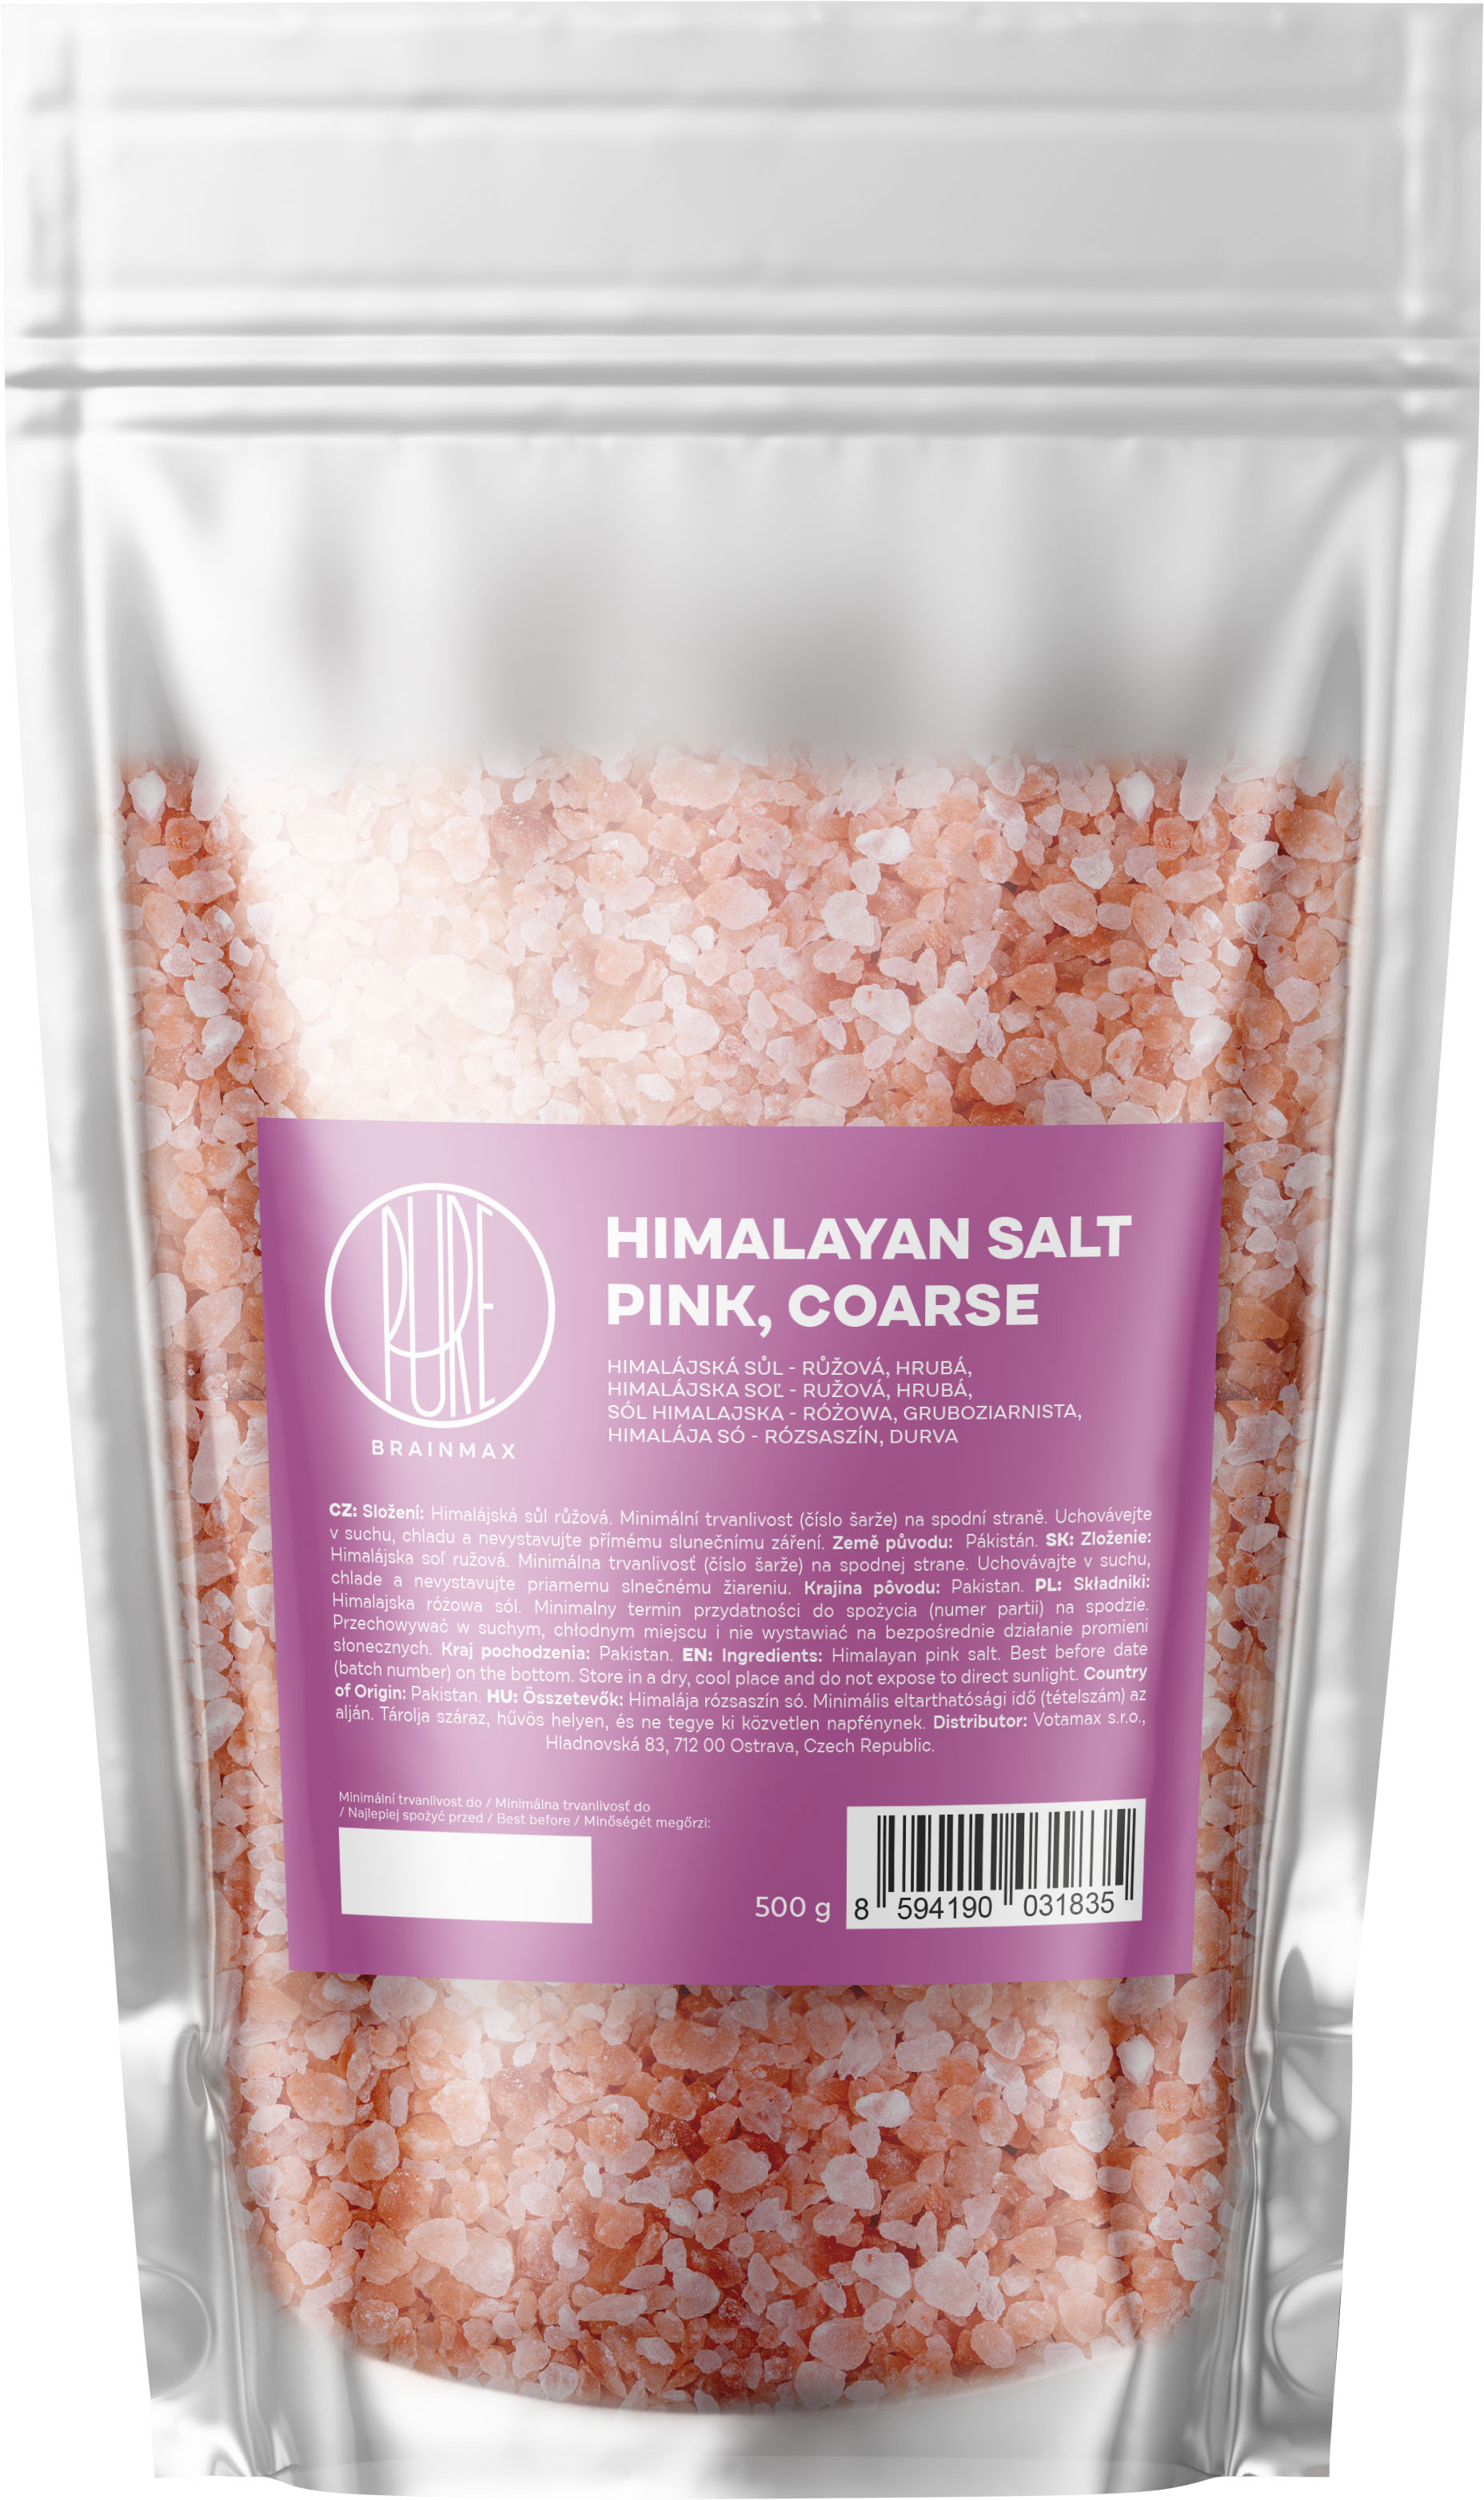 BrainMax Pure Himalayan Salt Pink, Coarse, Himalájská sůl, růžová, hrubá, 500 g Himalájská hrubozrnná sůl